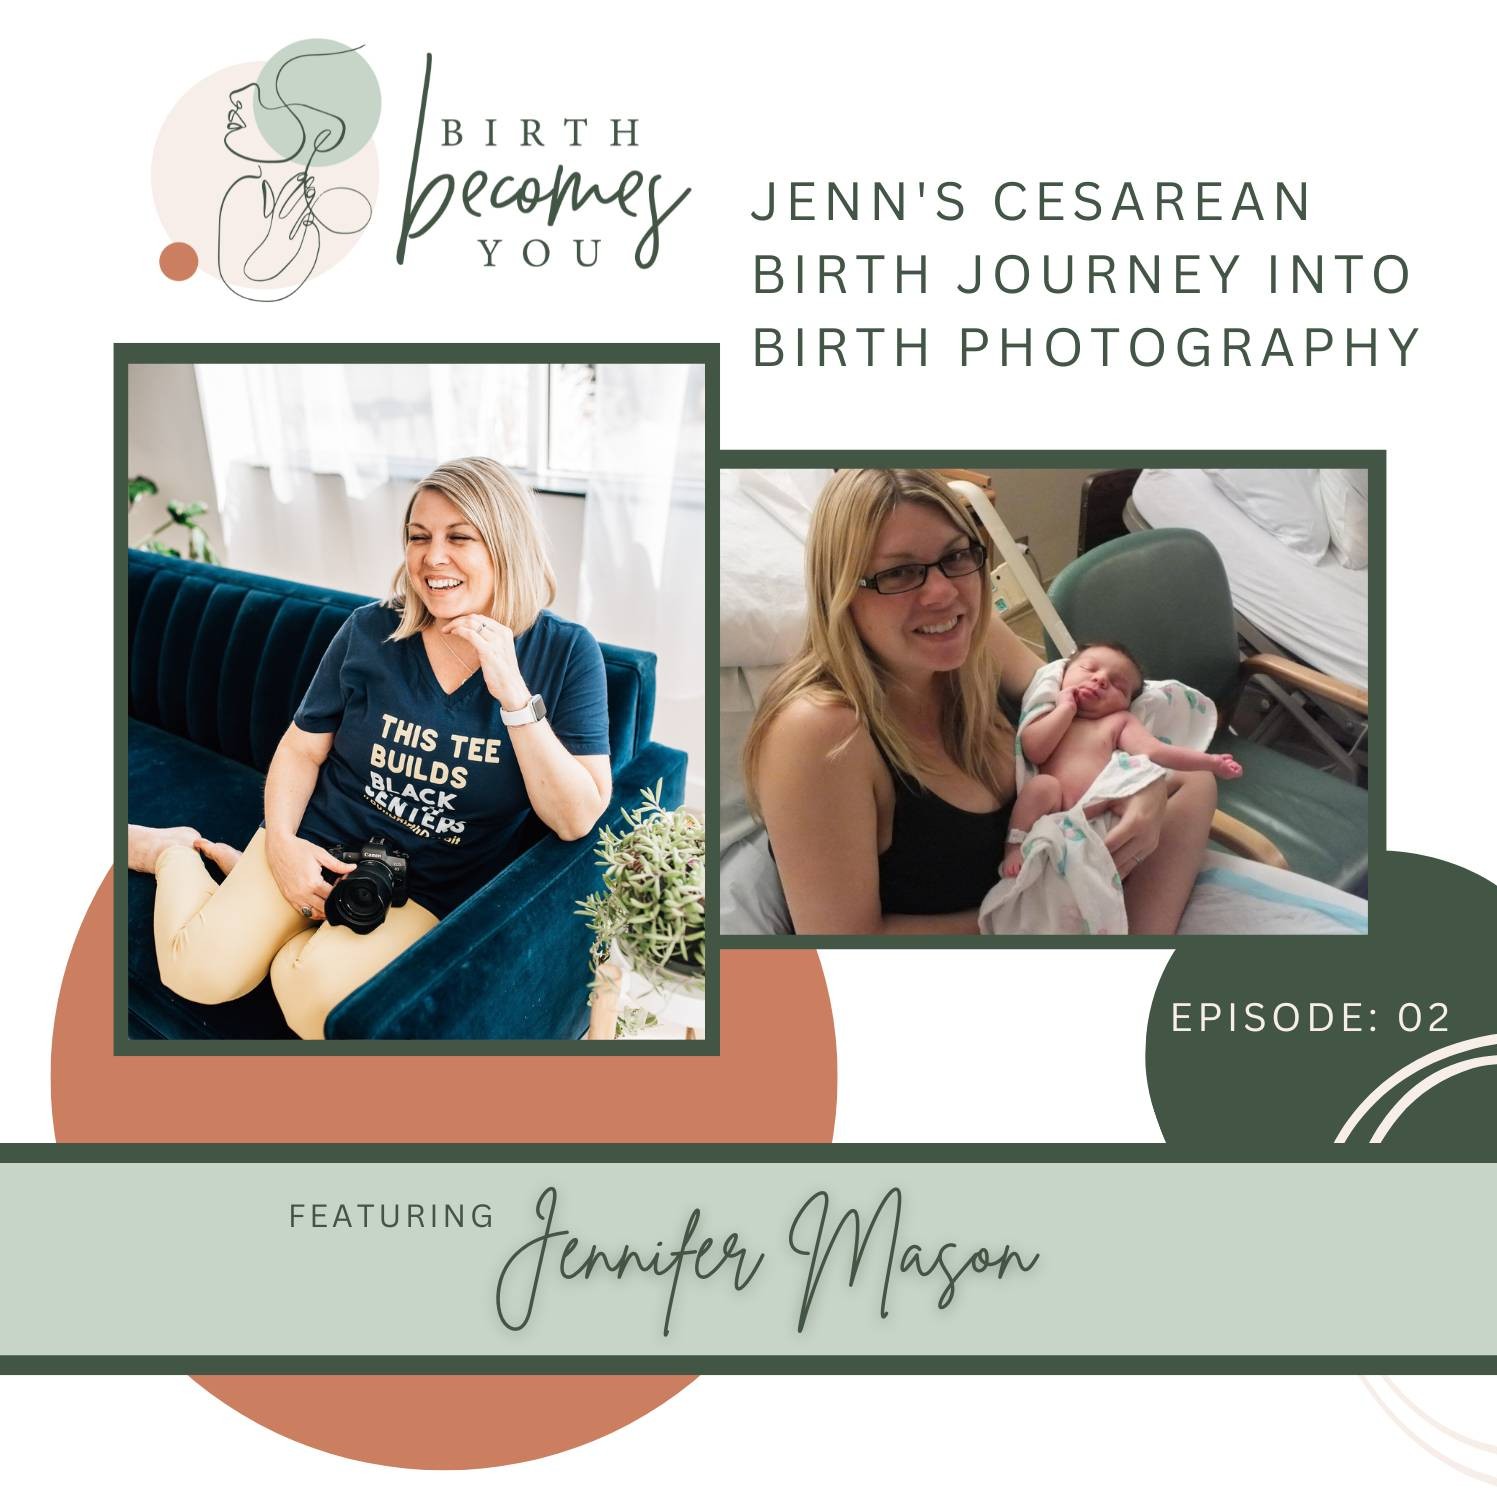 Jenn's Cesarean Birth Journey into Birth Photography